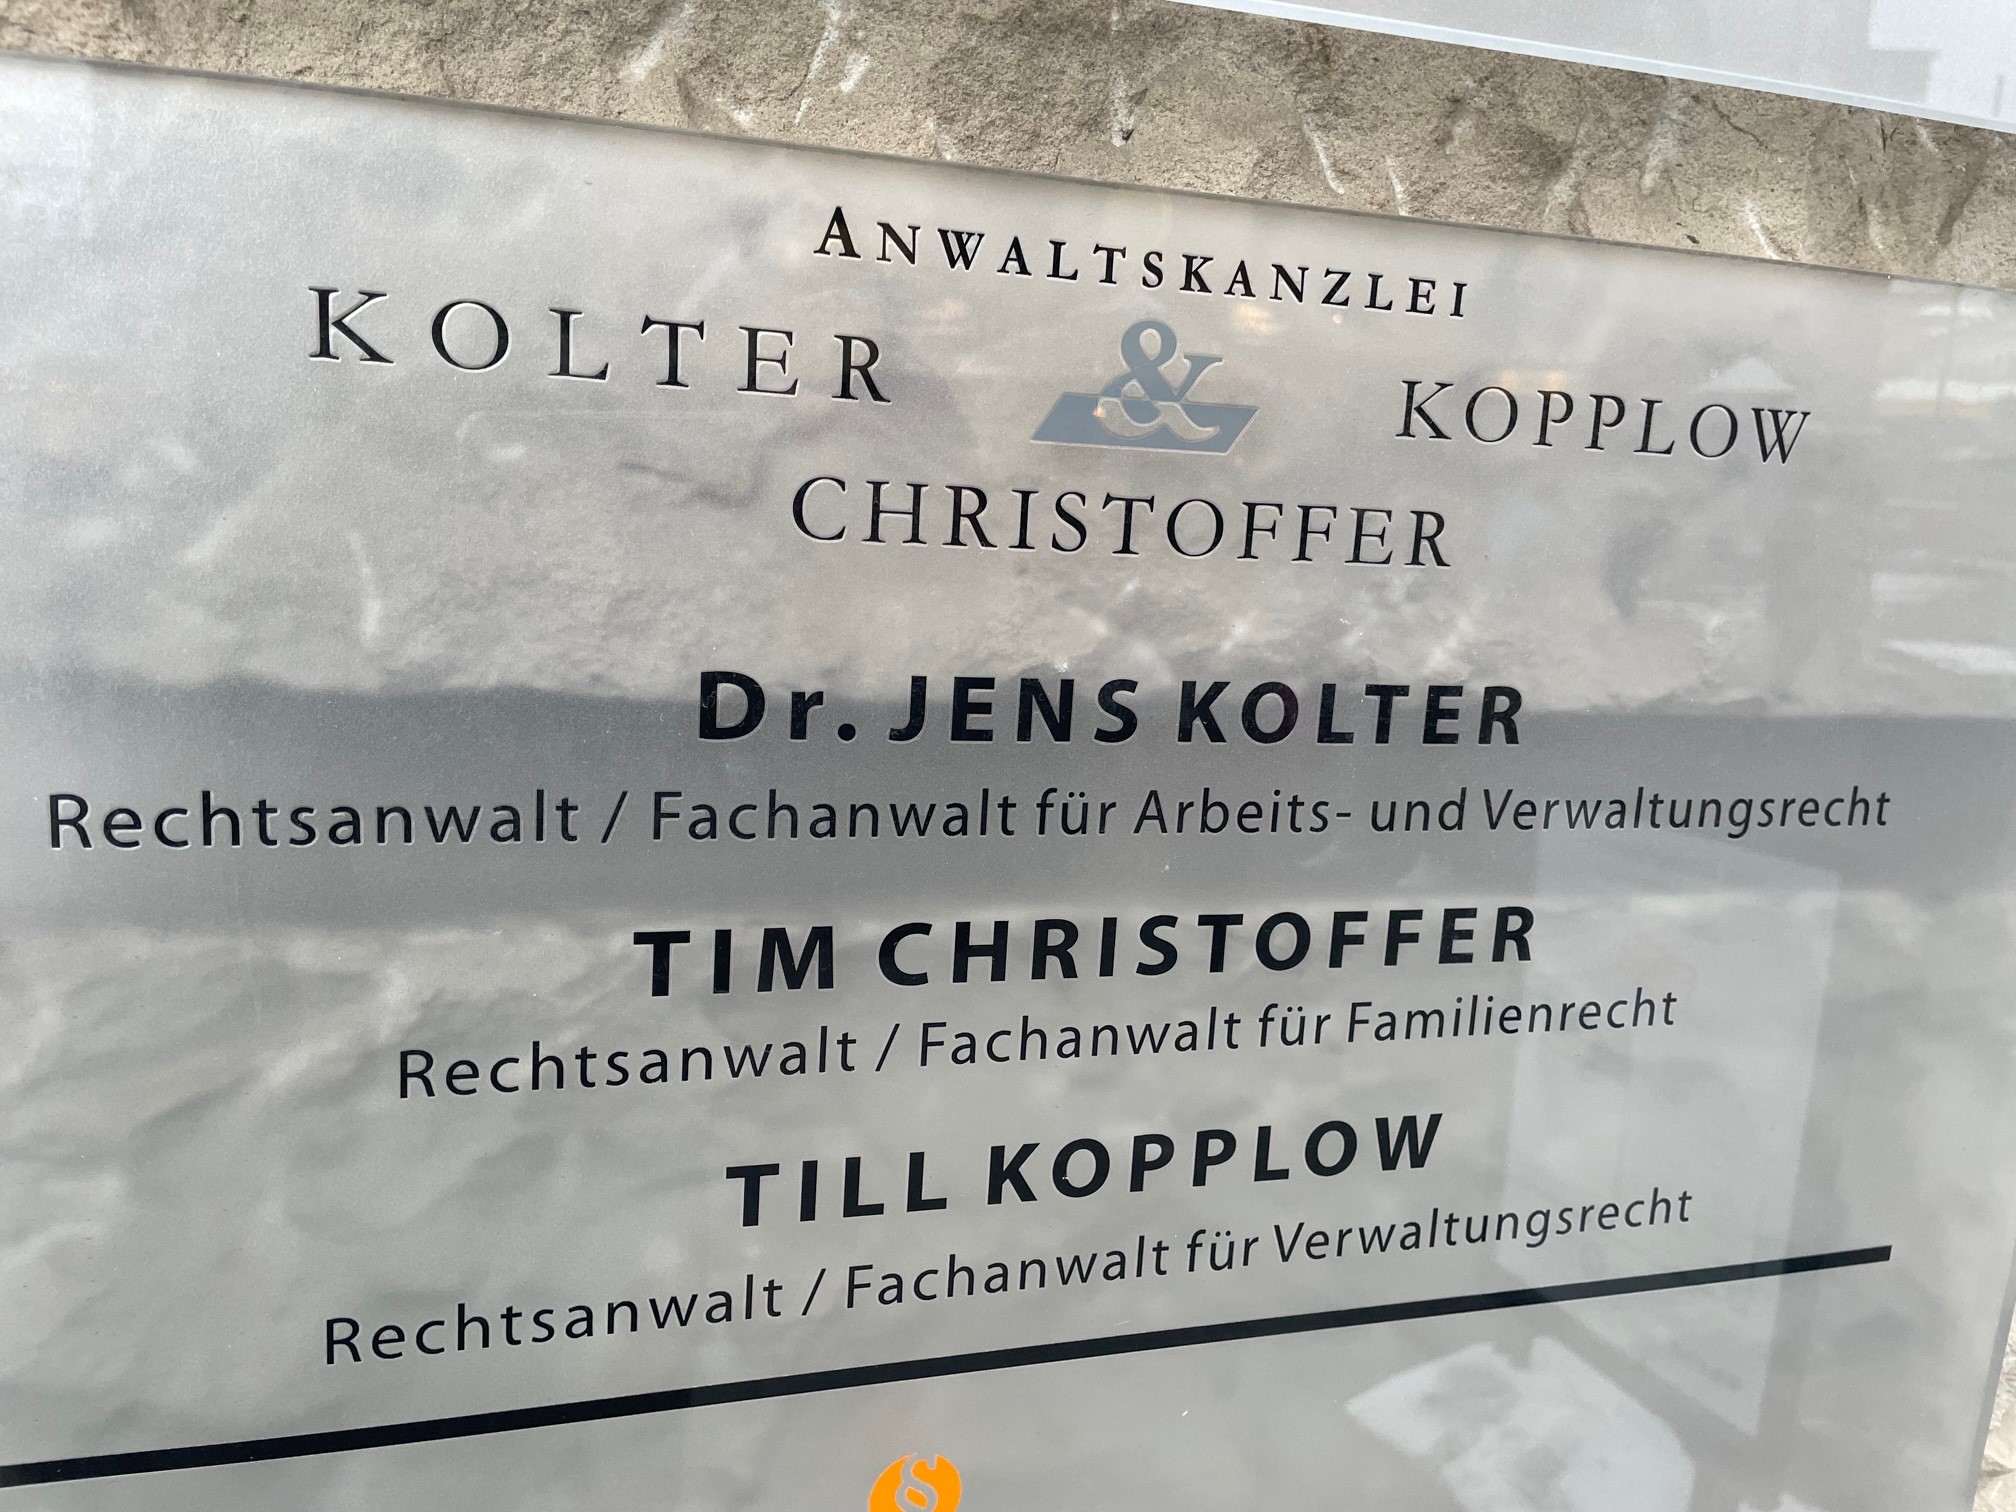 Bild 1 Anwaltskanzlei Kolter, Christoffer & Kopplow in Wiesbaden